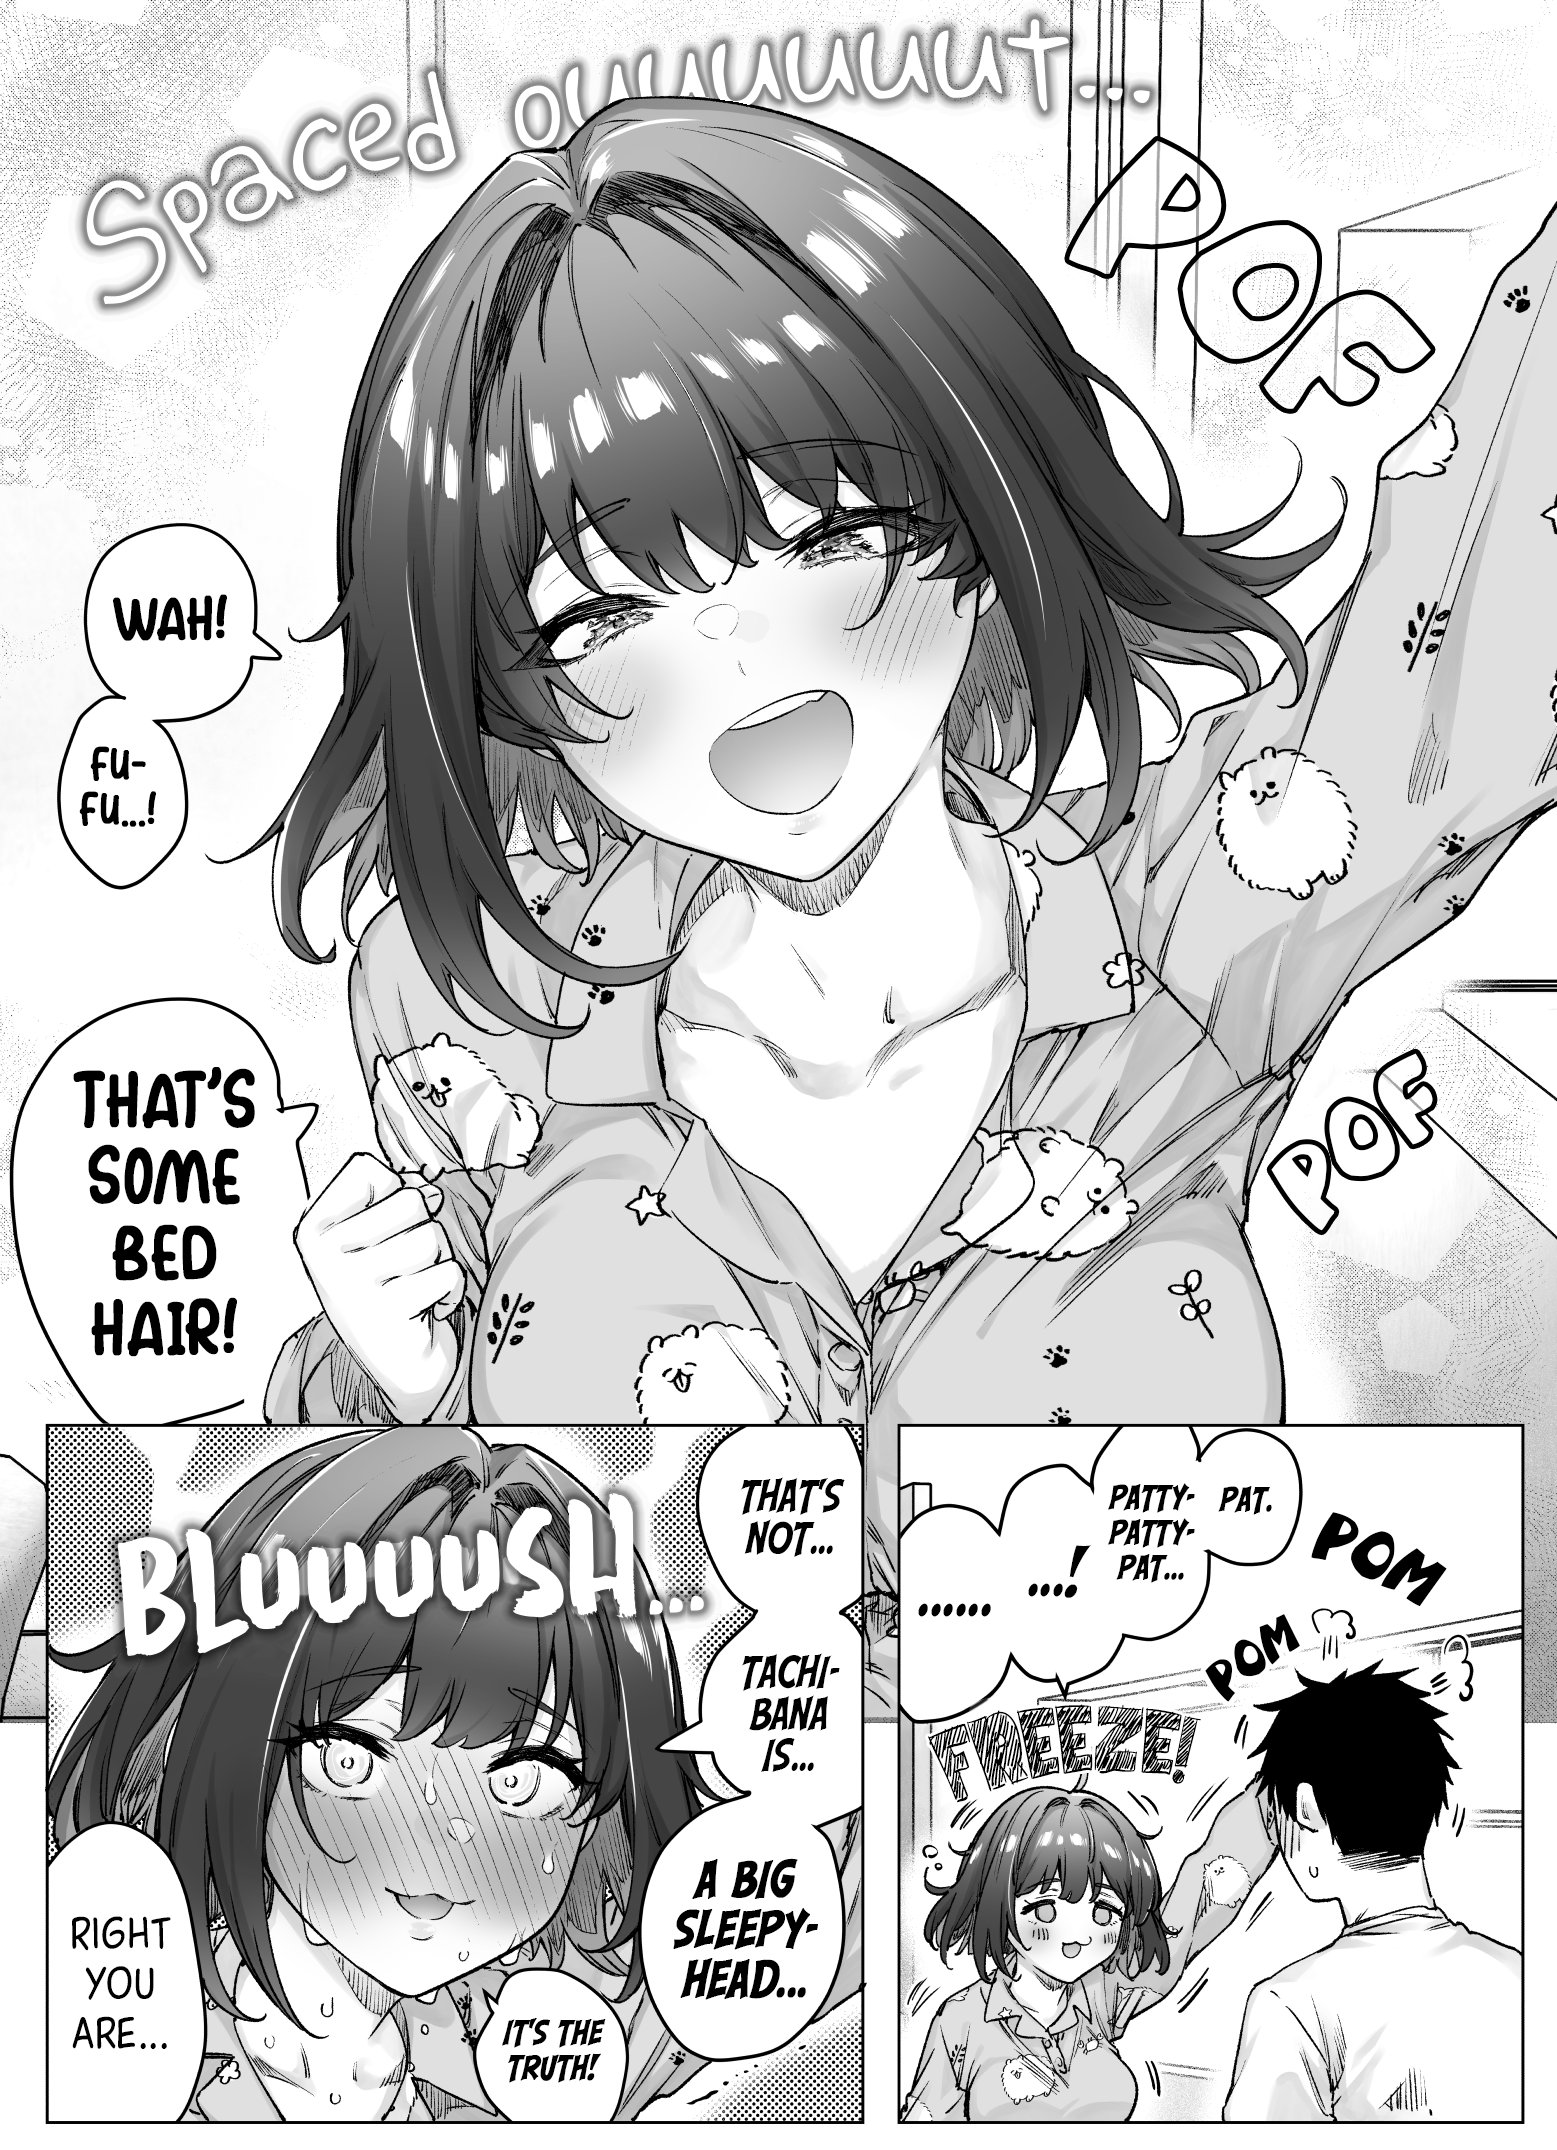 DISC] The Tsundere-chan Who's Communicating Her Love - Day 54 by  @yakitomahawk & @kota2comic : r/manga